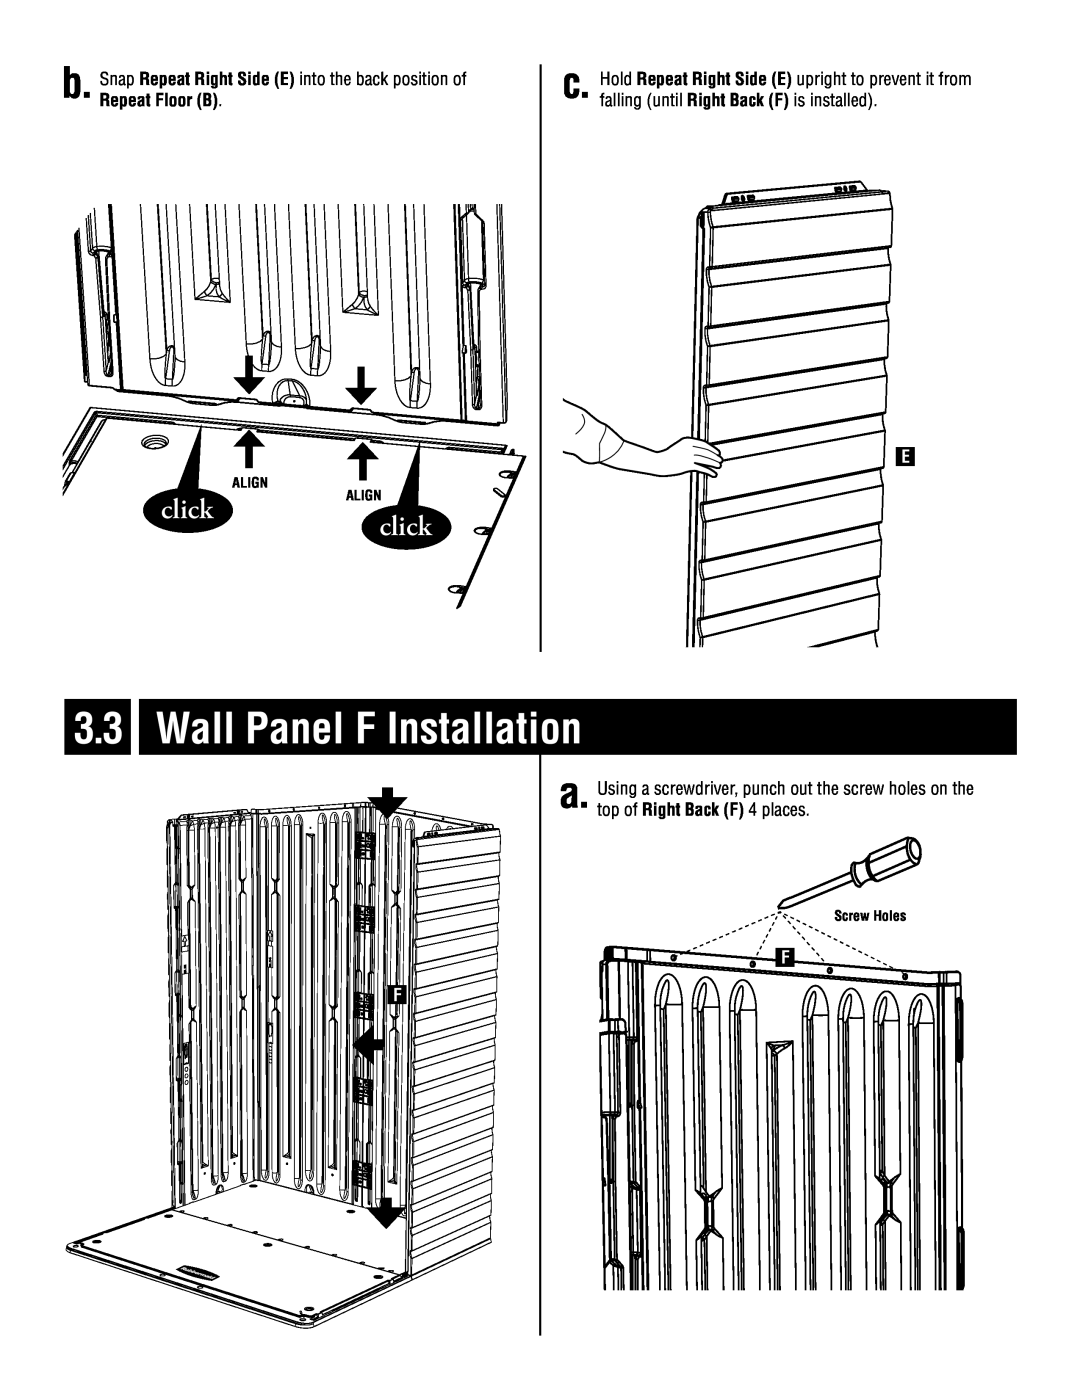 Rubbermaid 5L20 instruction manual Wall Panel F Installation, clickALIGN click 